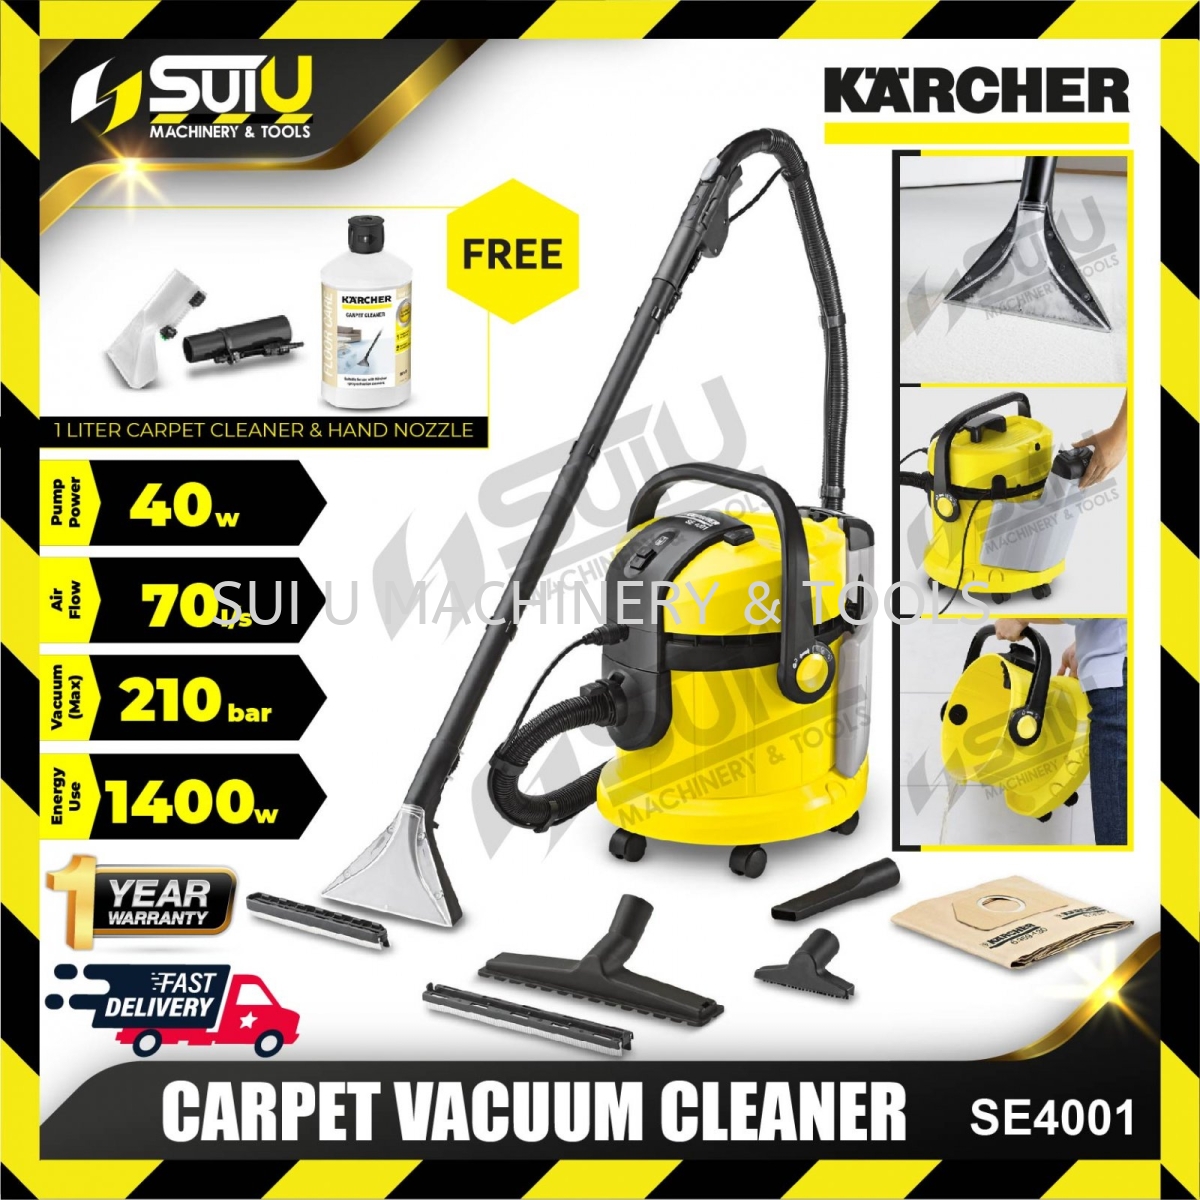 KARCHER SE4001 4L Carpet & Upholstery Vacuum Cleaner 1400W FOC